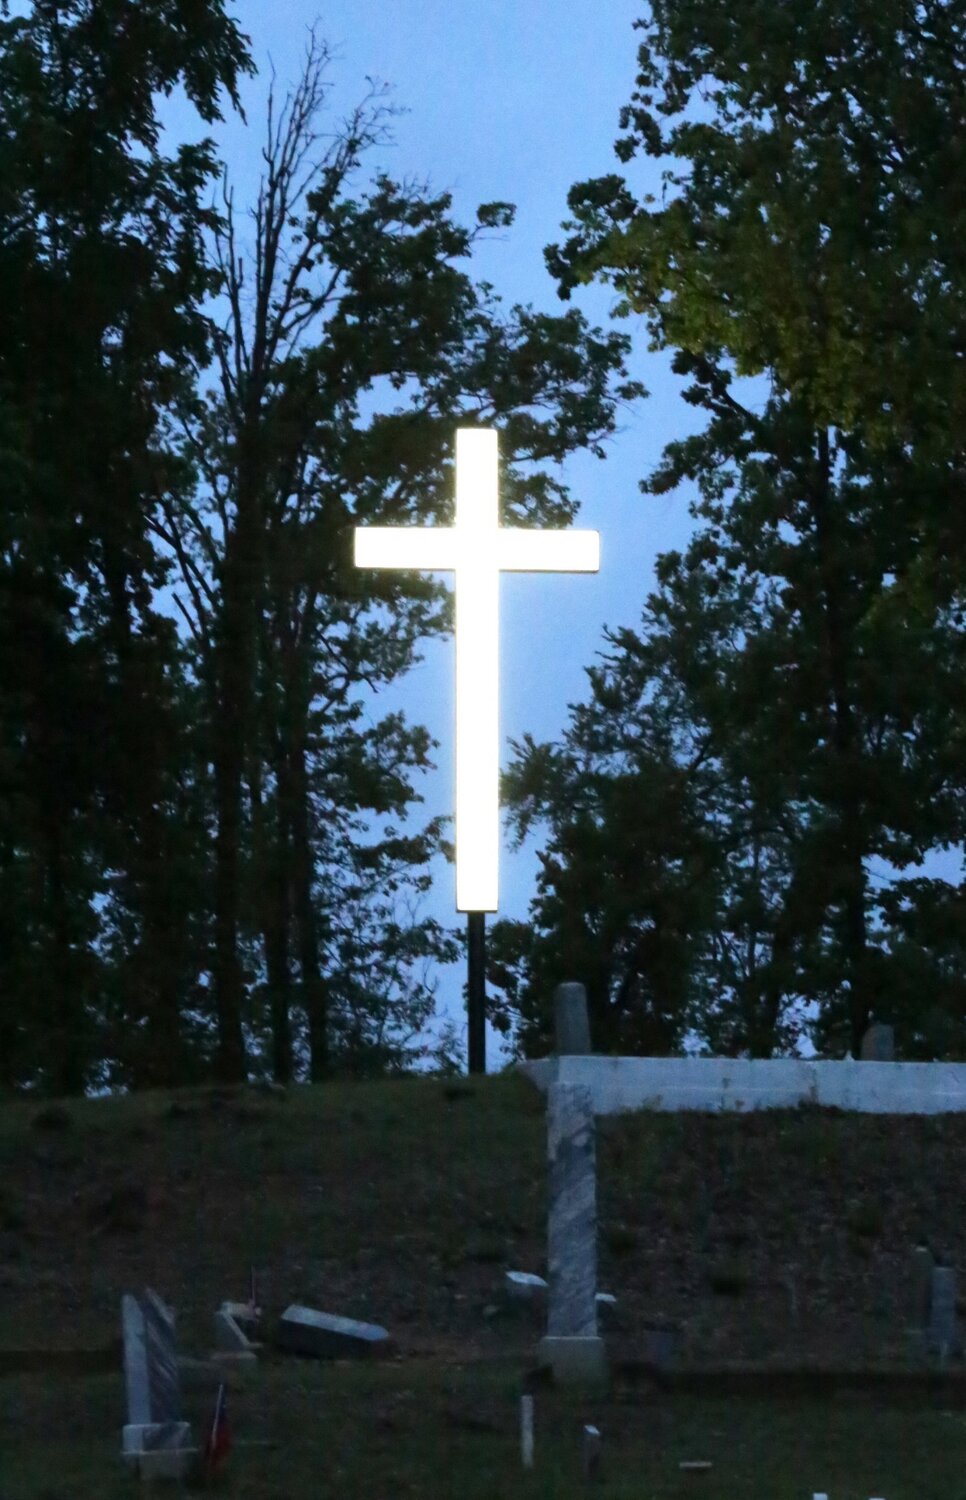 The illuminated cross at Little Mound Church